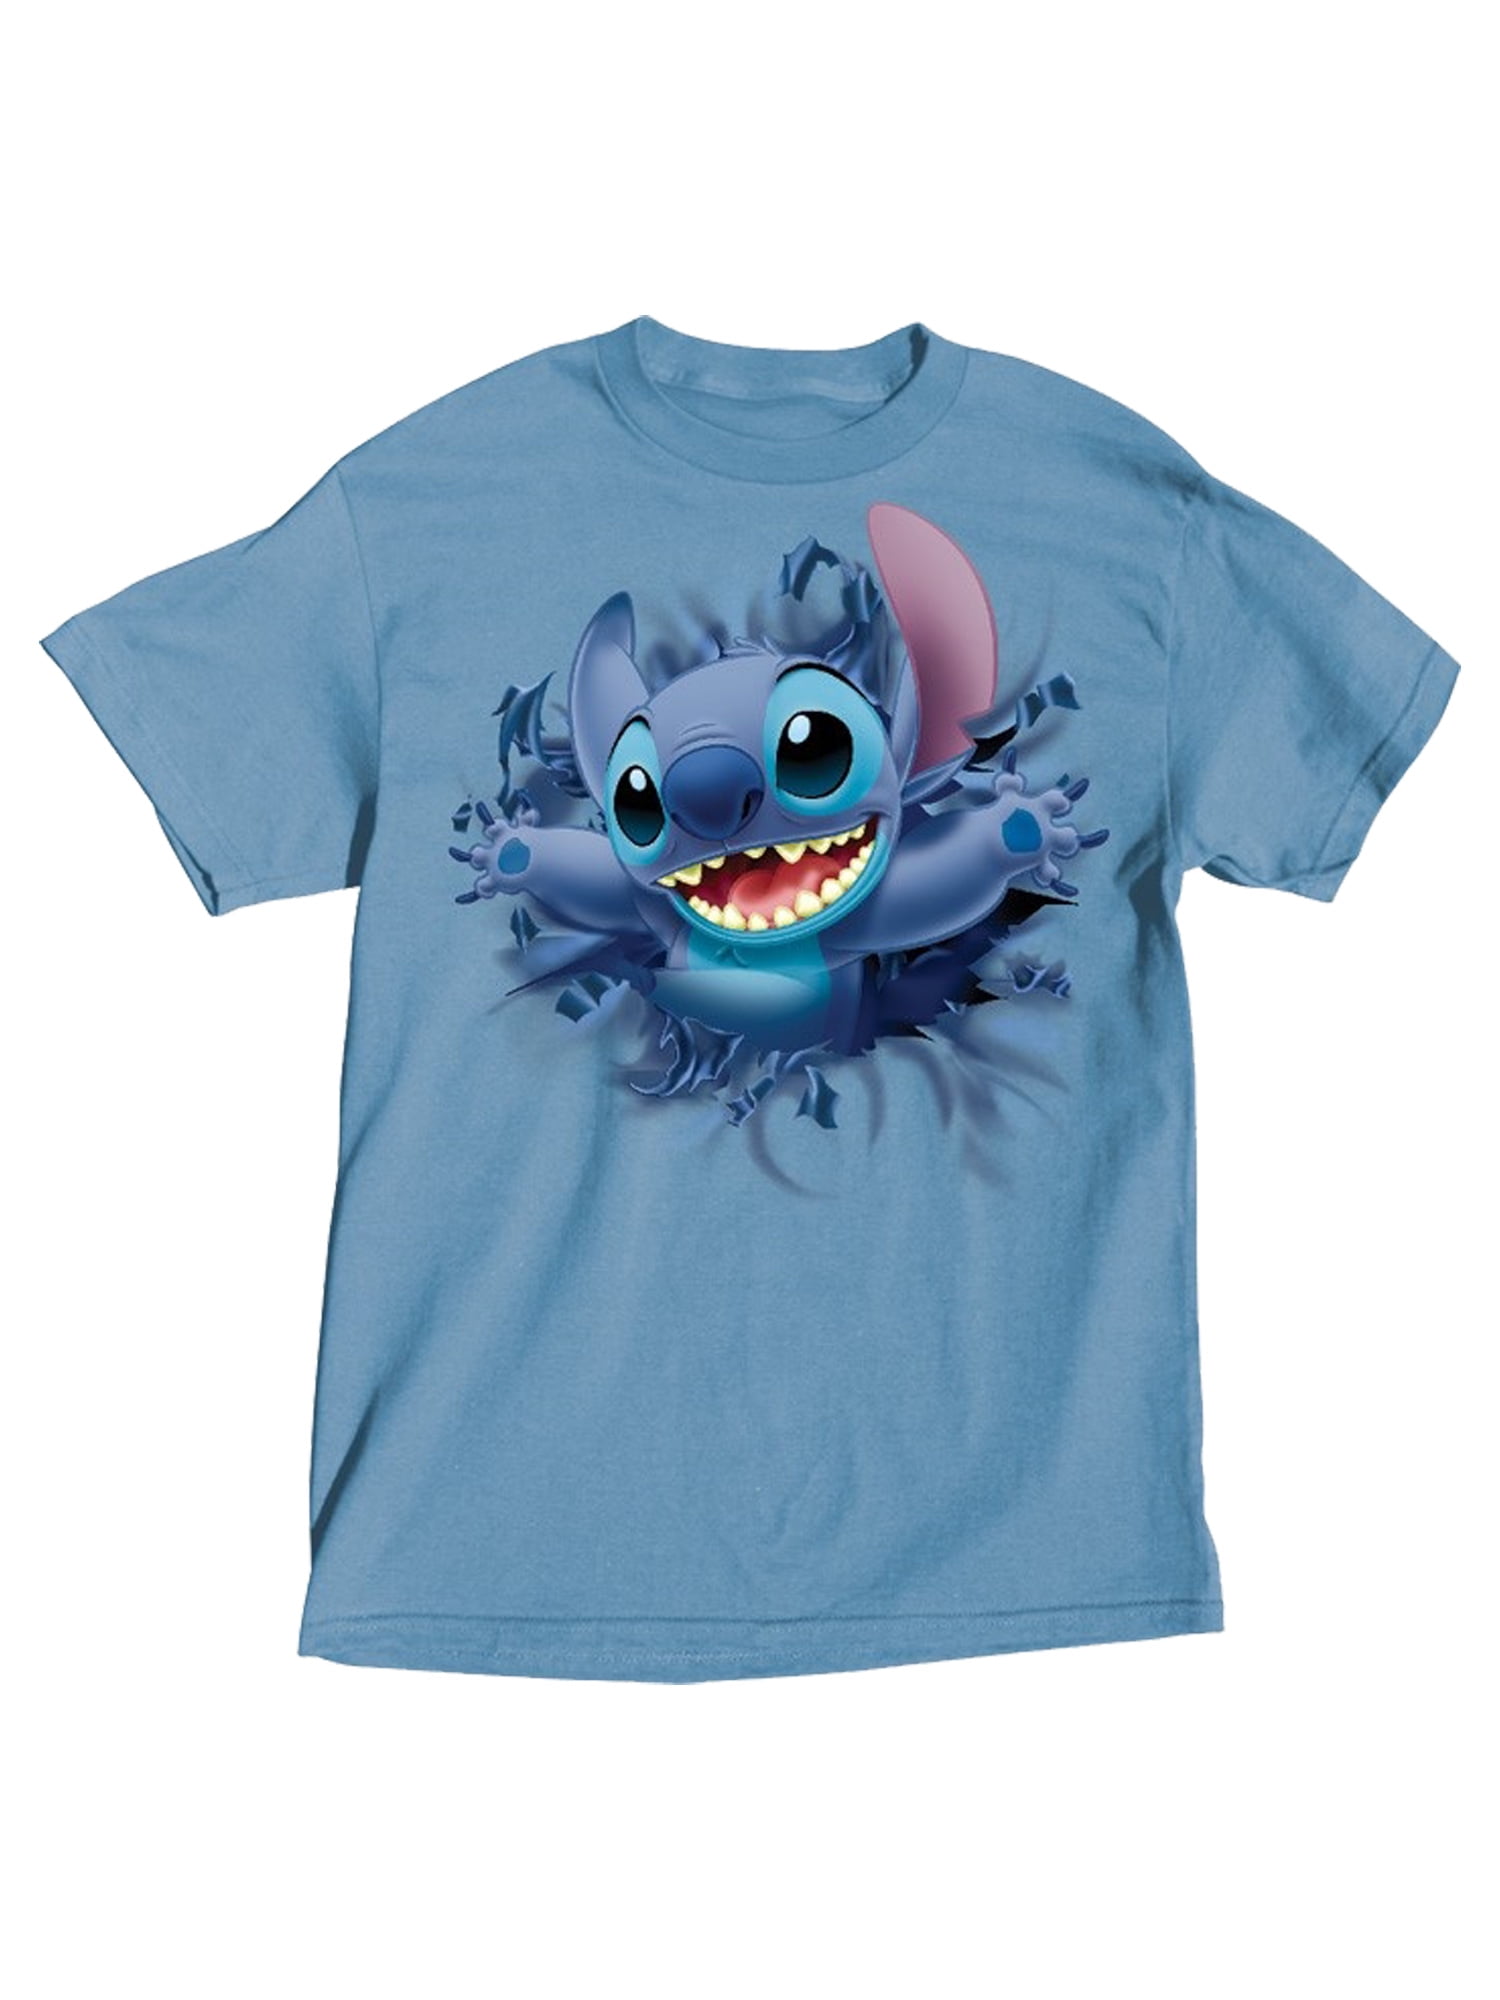 Disney Parks Stitch T-Shirt Light Blue w/Blue Trim New with Tags Size XL Youth 